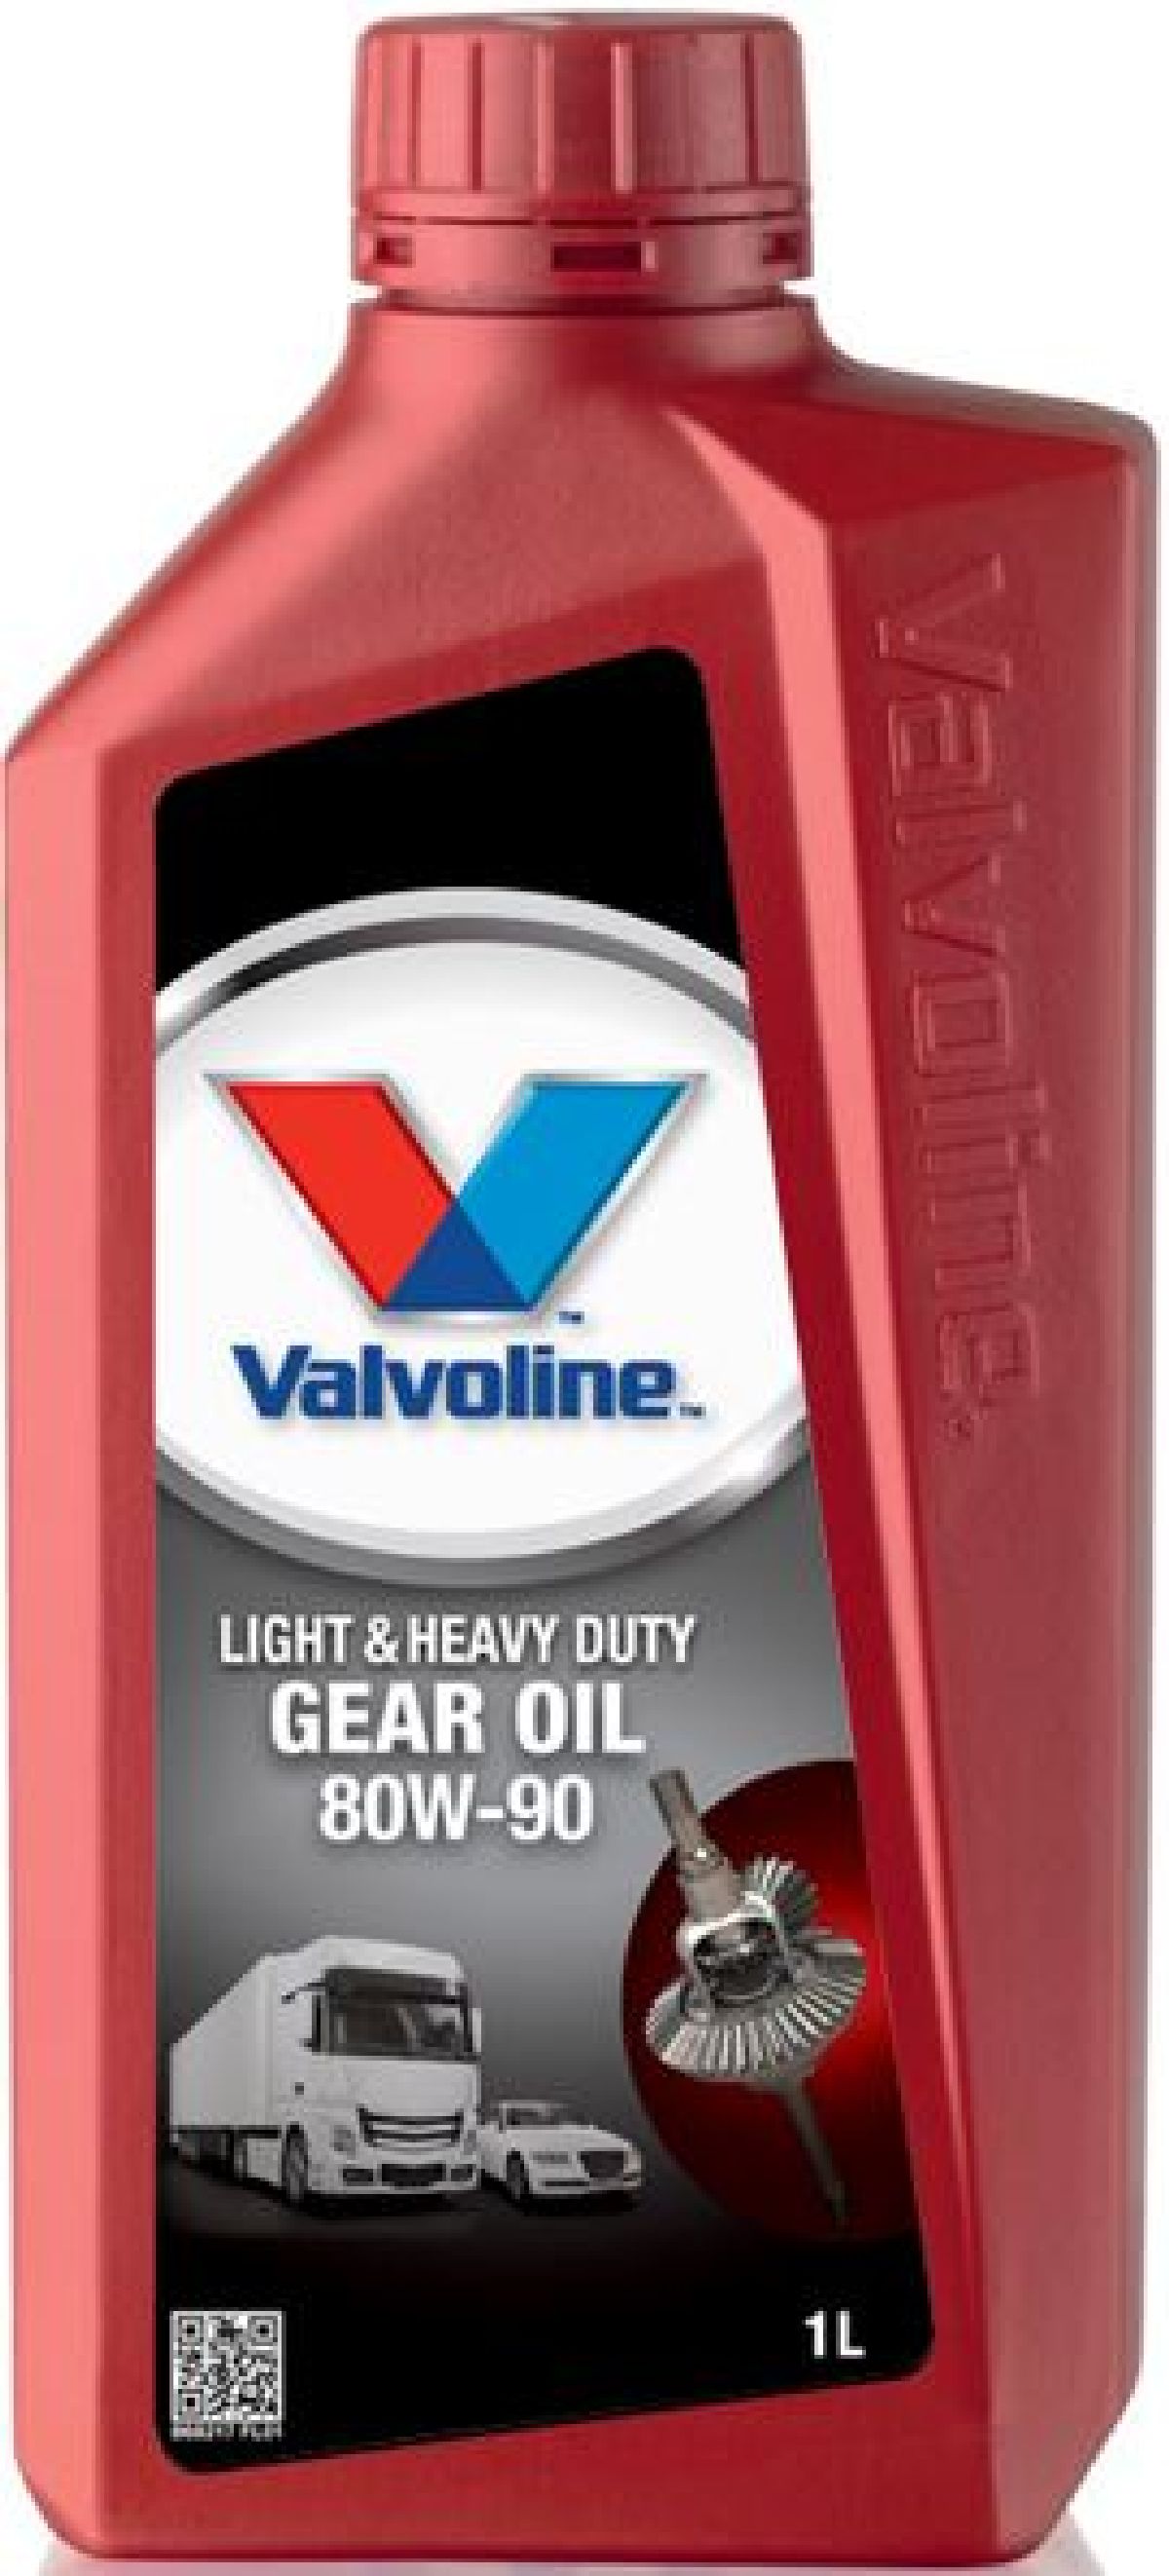 Valvoline LD&HD Gear Oil 80W-90